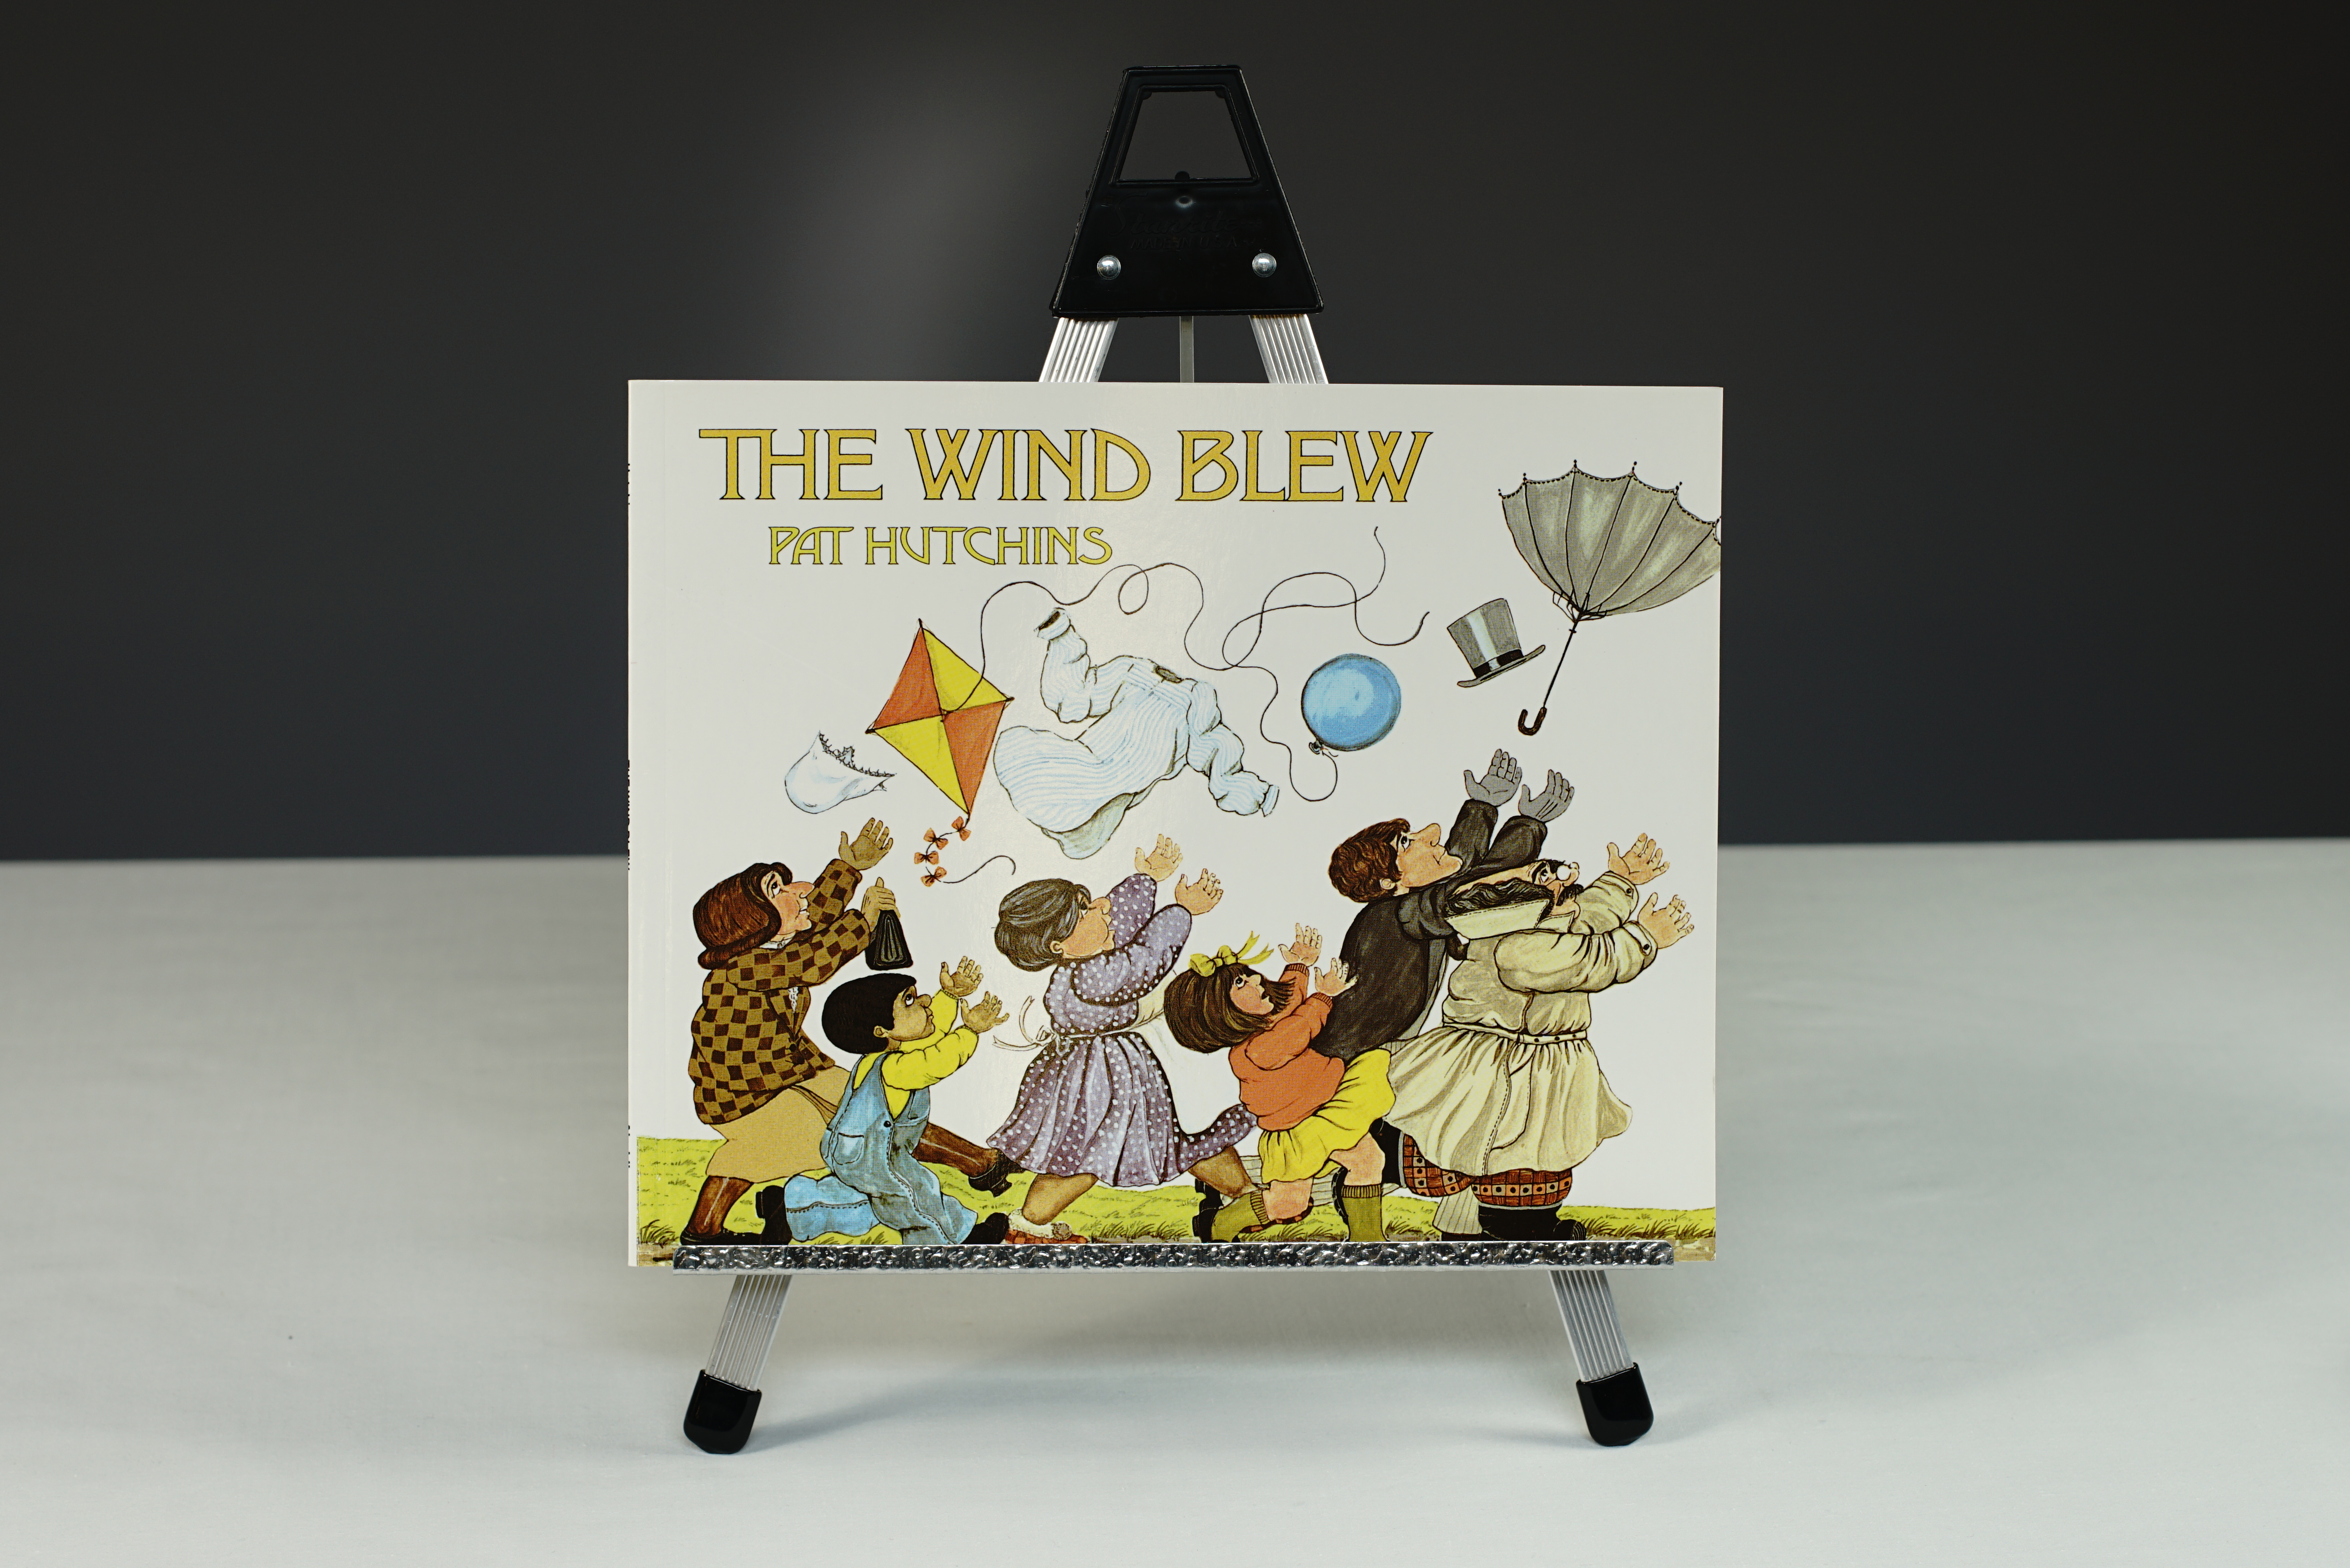 The Wind Blew Book